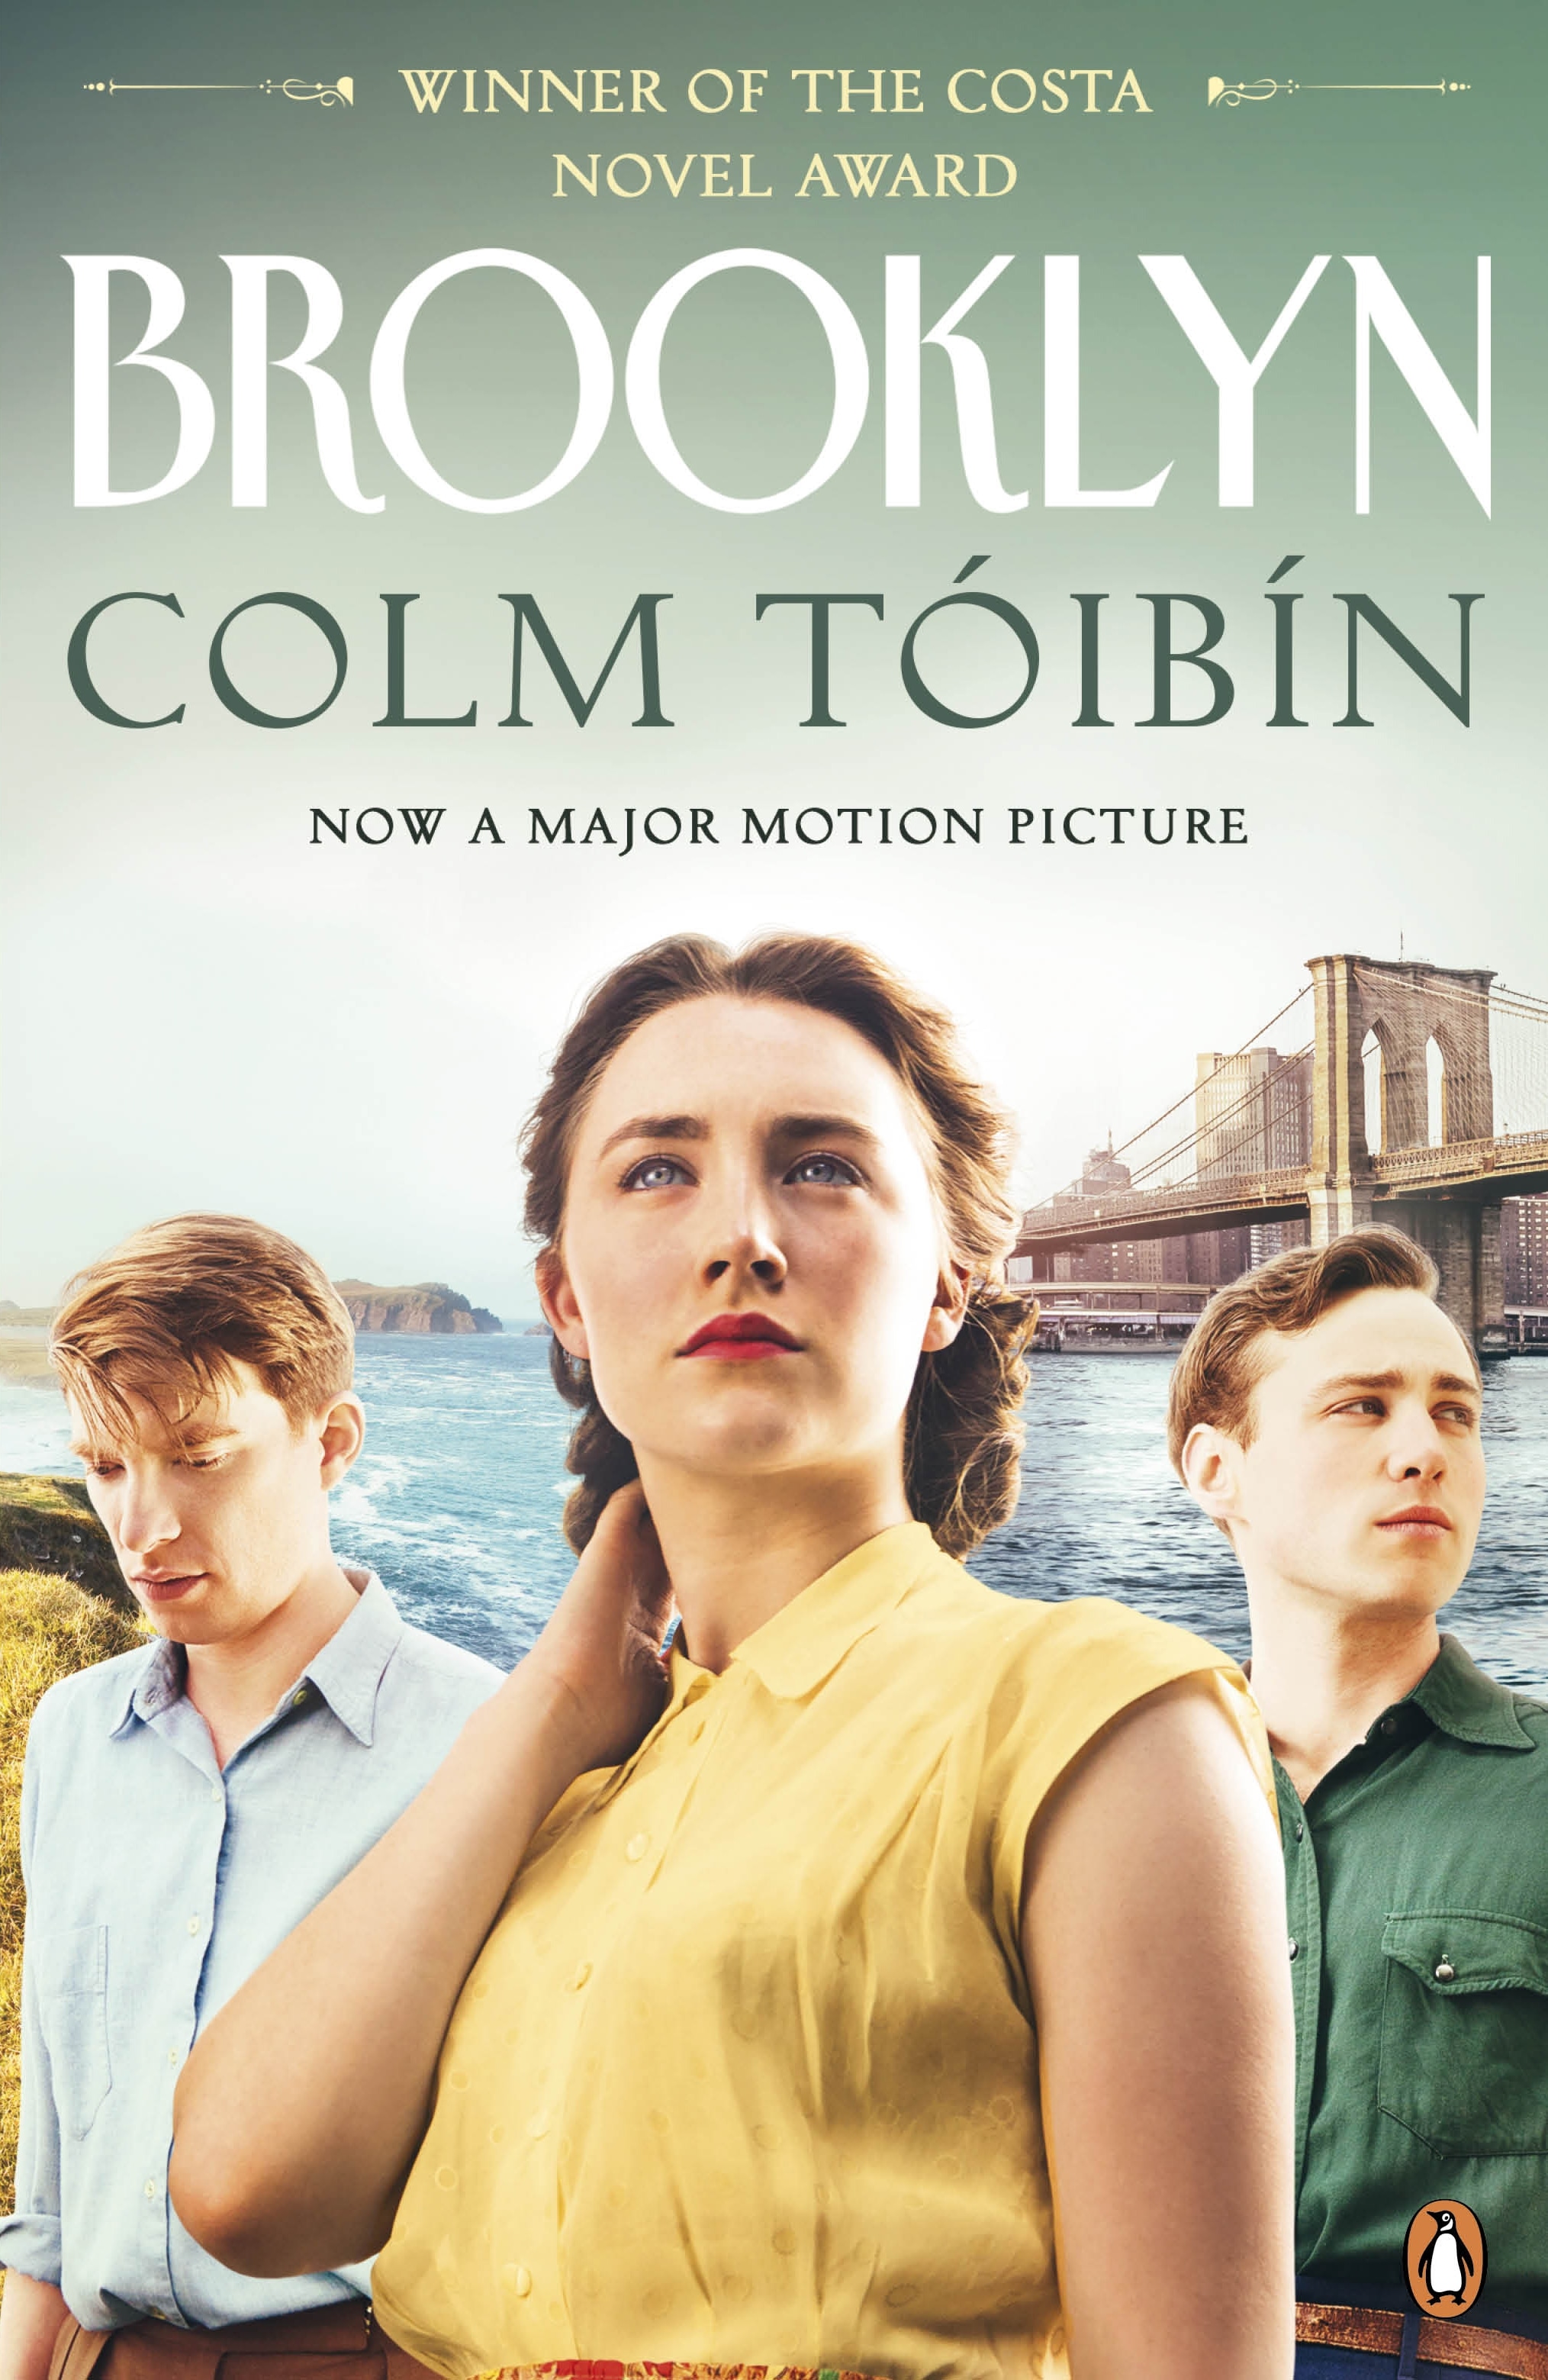 Book “Brooklyn” by Colm Tóibín — October 1, 2015